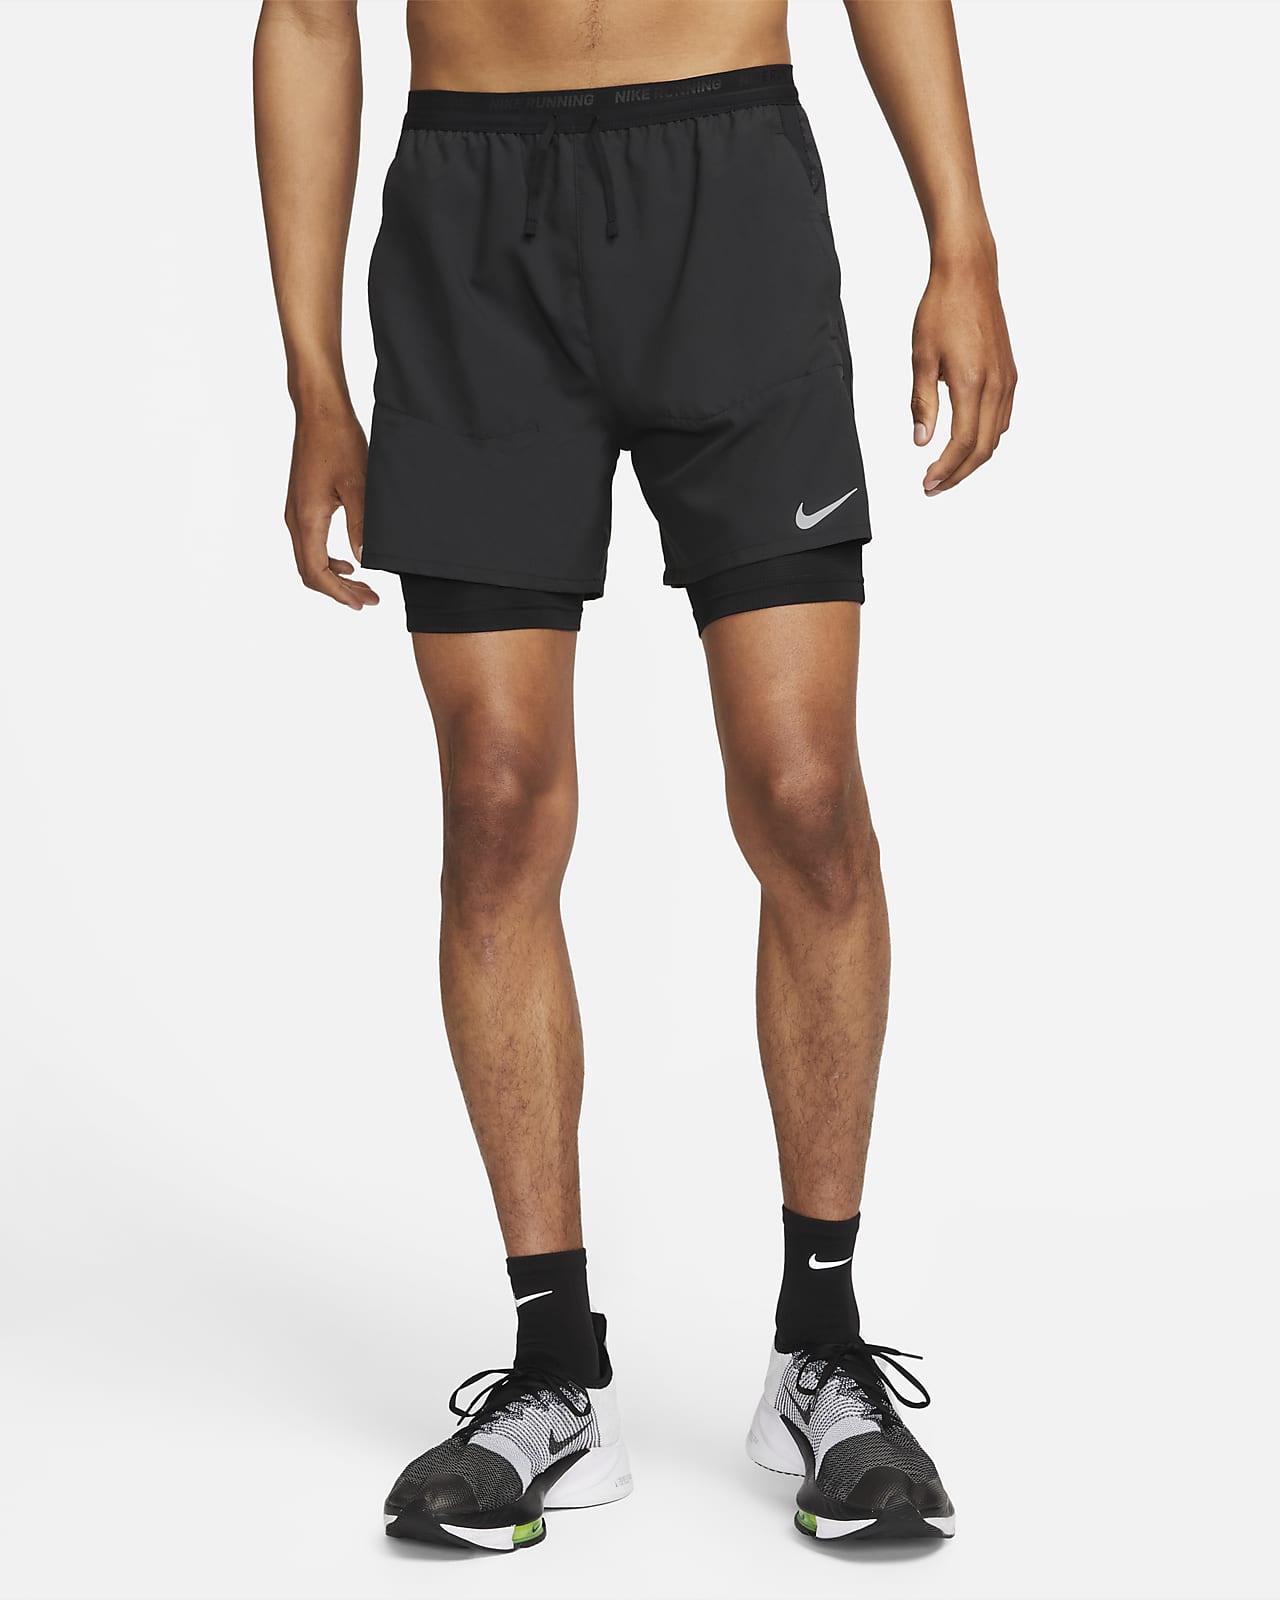 De confianza tijeras impacto Shorts de running 2 en 1 de 18 cm para hombre Nike Dri-FIT Stride. Nike.com